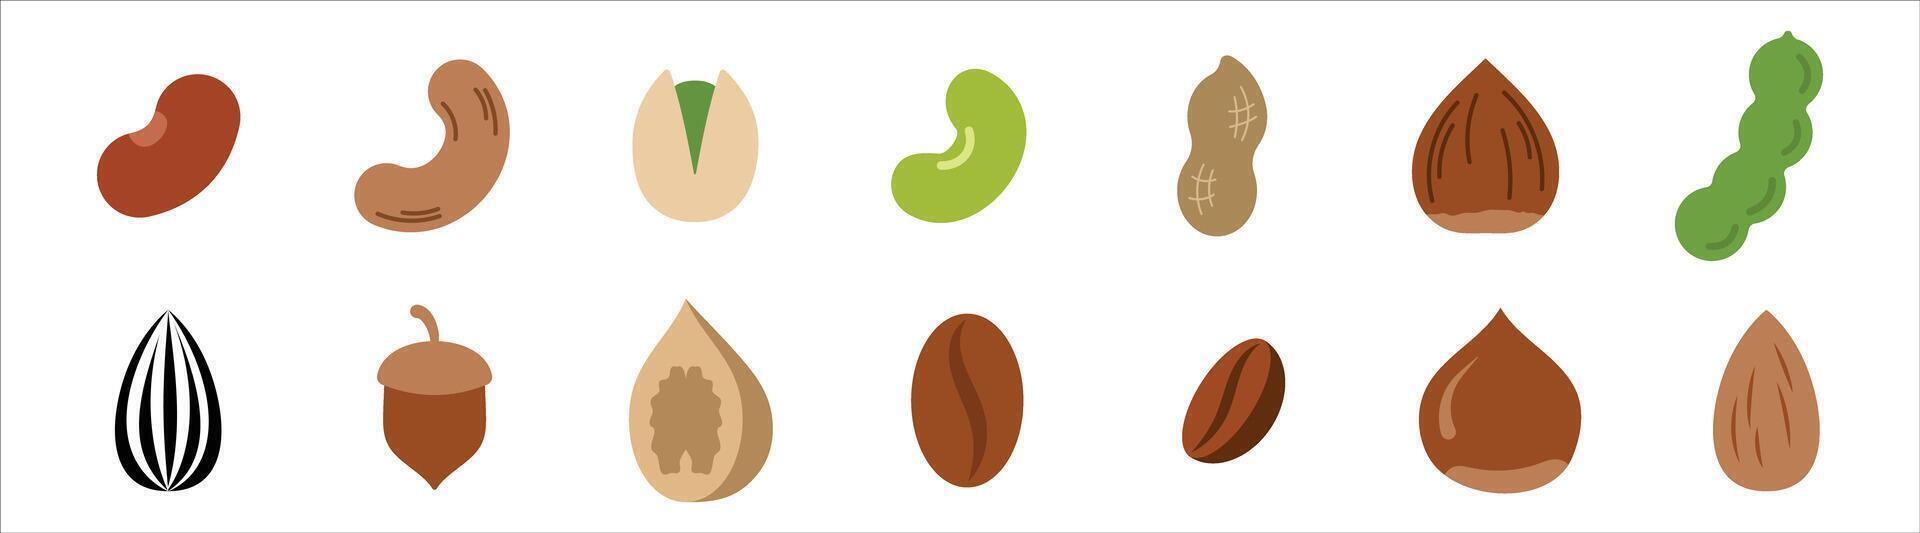 colorfull seed icon object, walnut, chesnut, peanut, vector